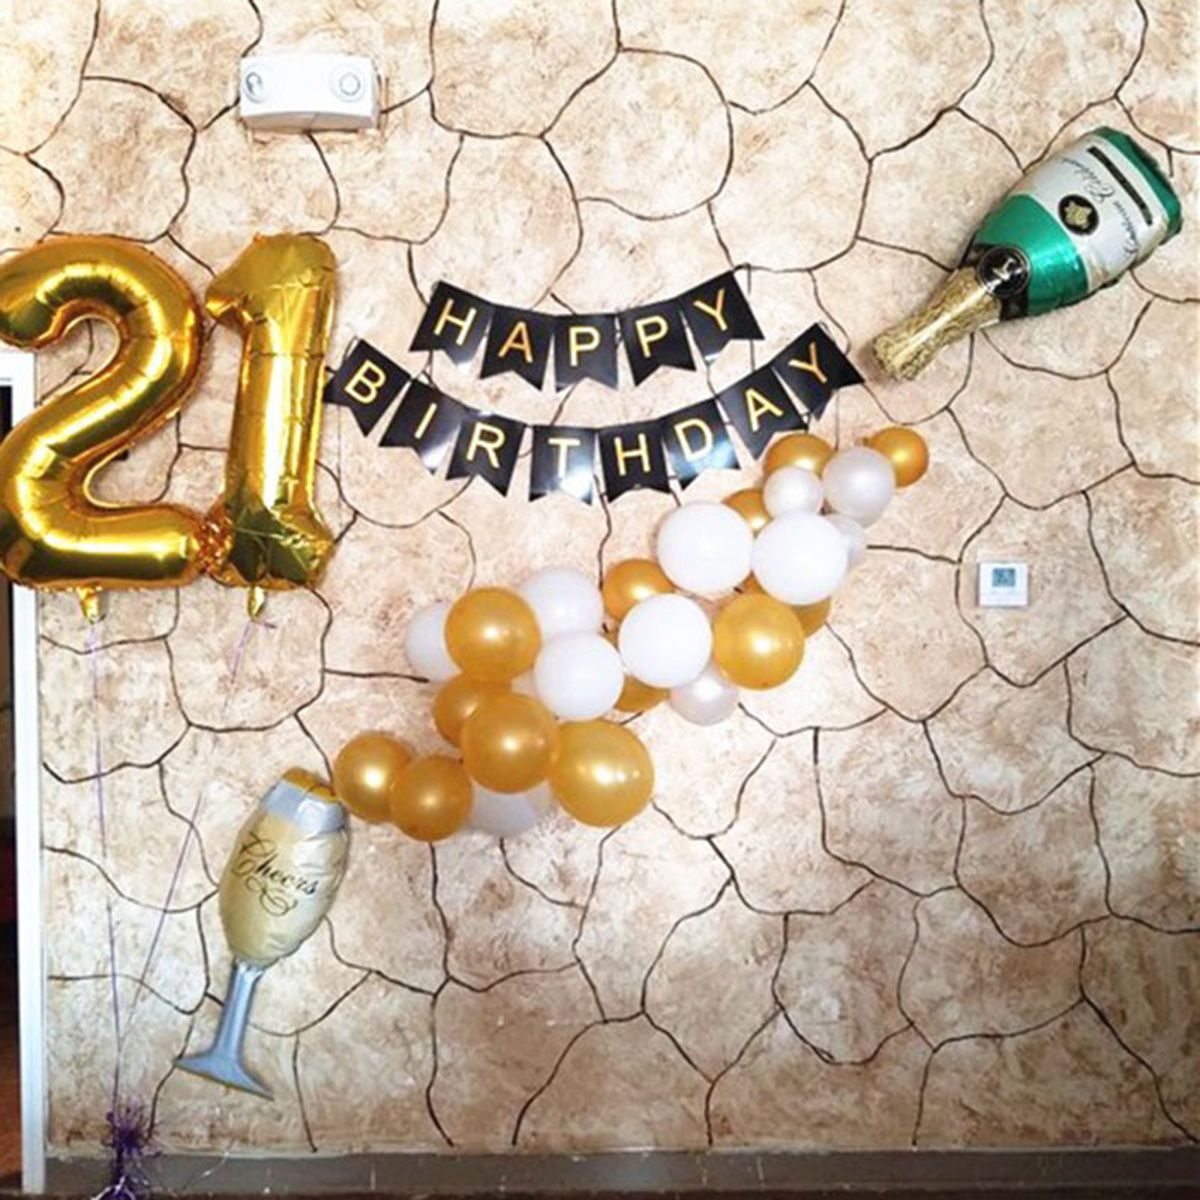 Confetti-Latex-Balloons-Baby-Shower-Wedding-Party-Birthday-Decor-1682565